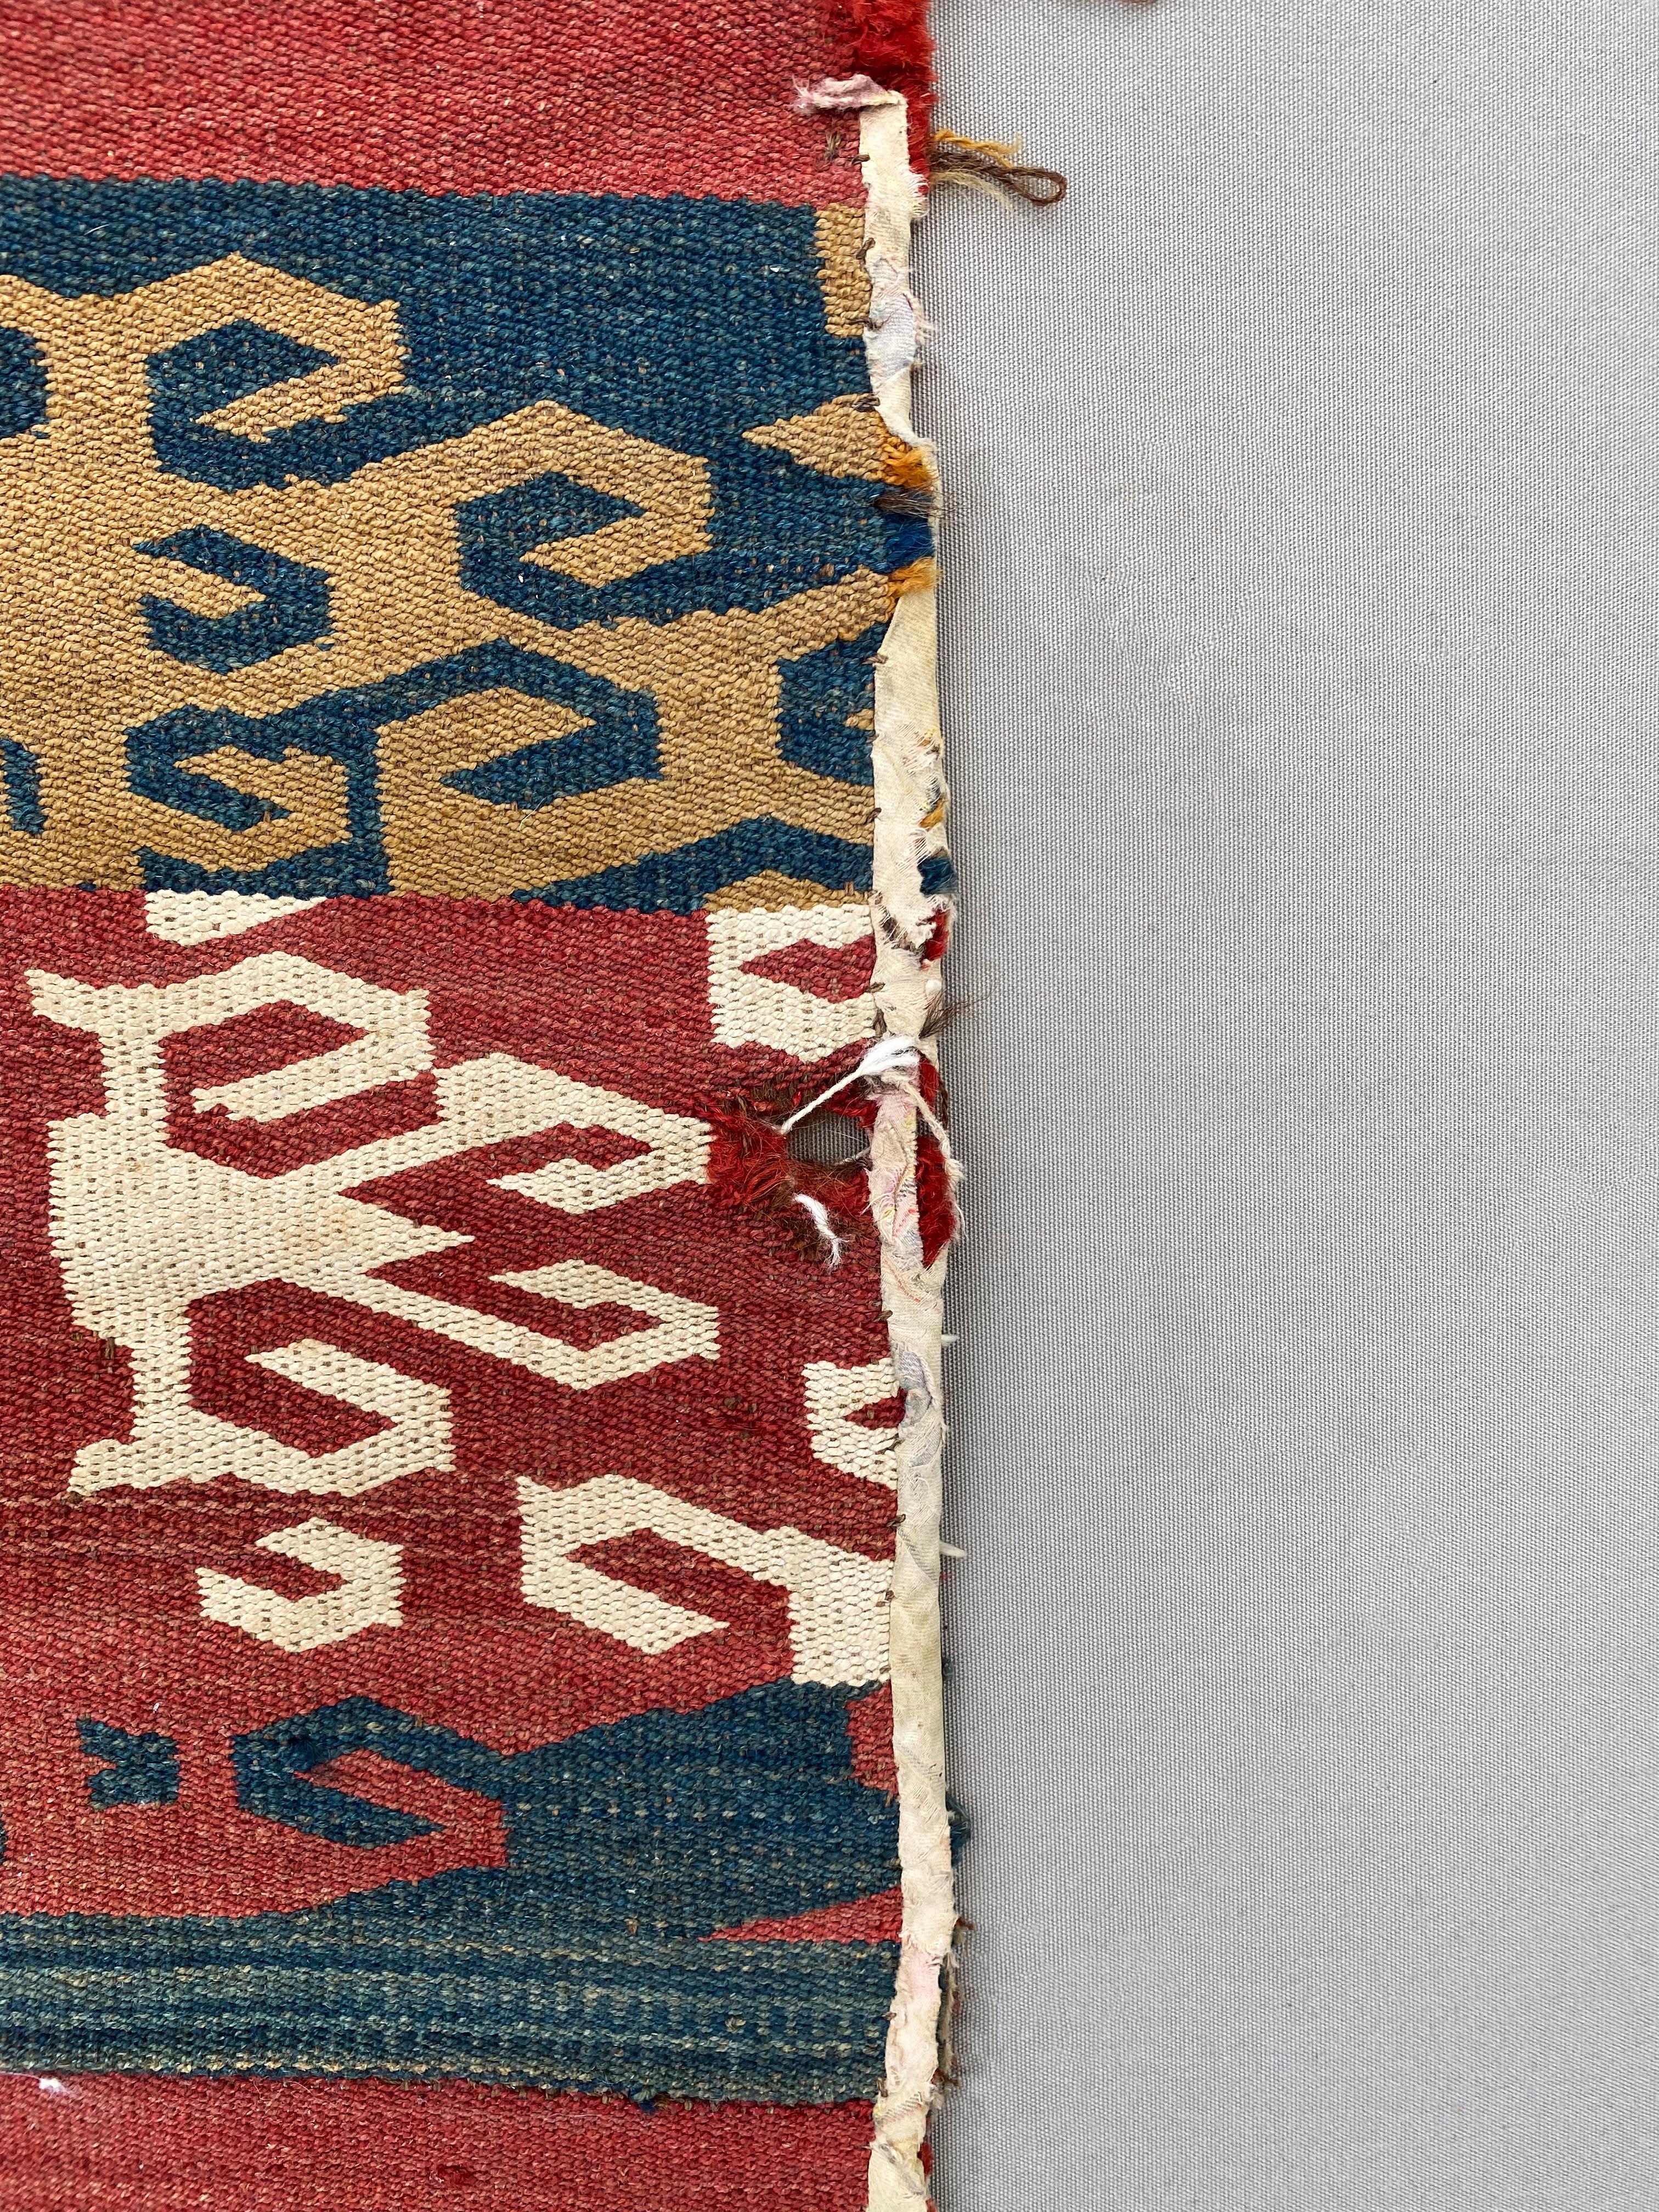 Uzbekistan Ghudjeri Tribal Kilim Rug from Wool, Room Size, Early 20th Century For Sale 1